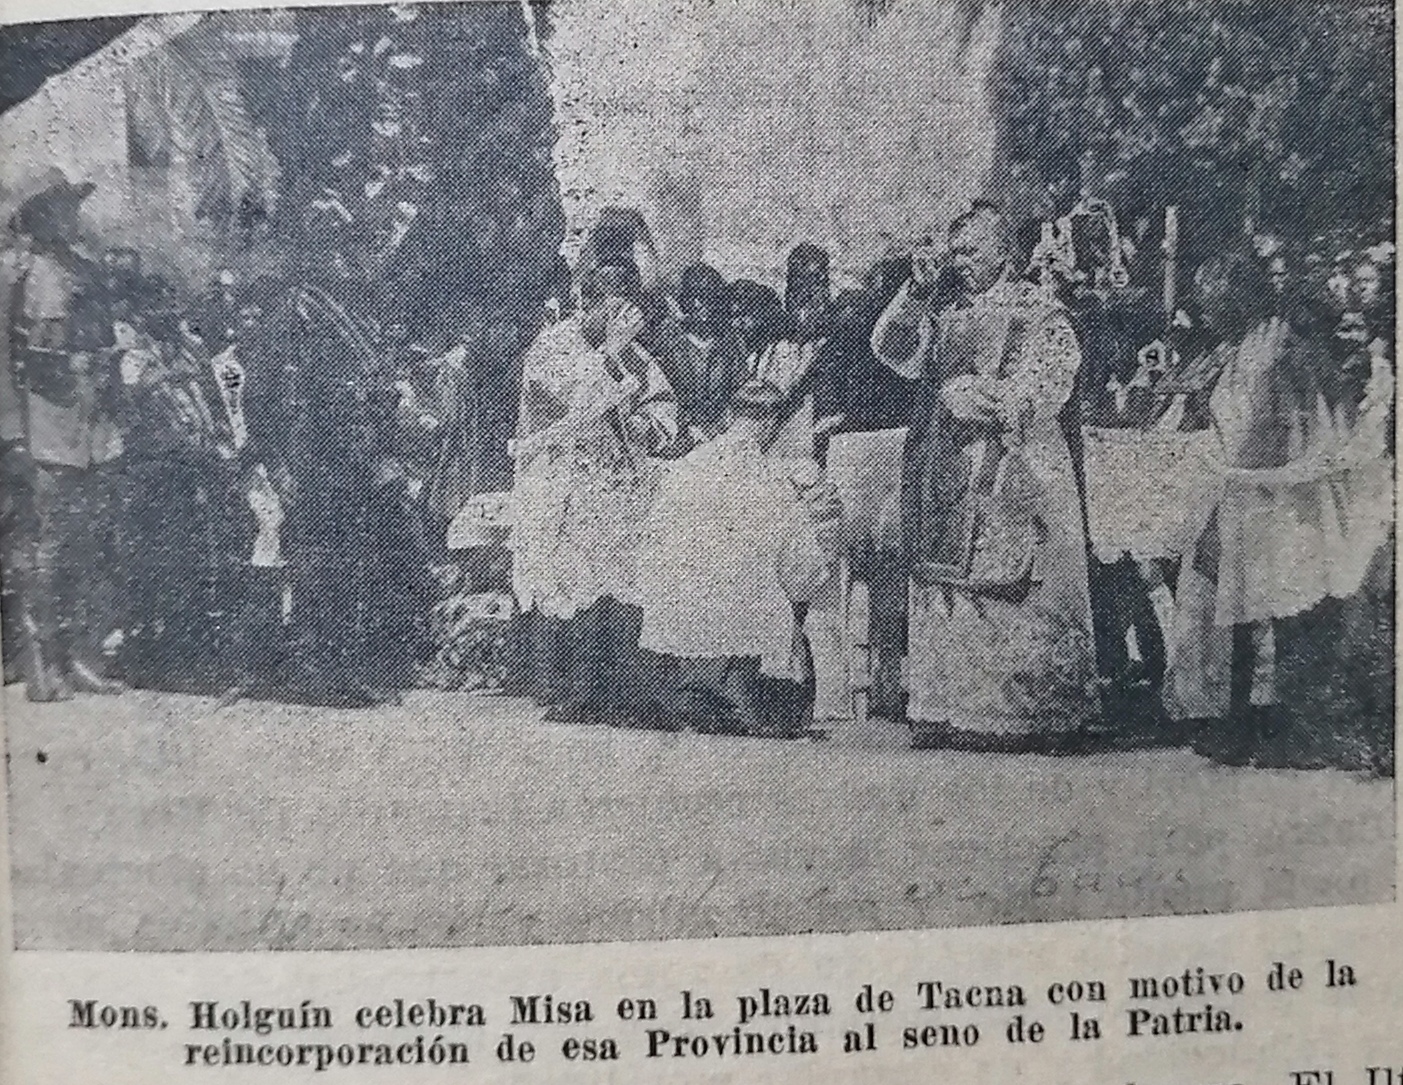 Holguín en la plaza de armas de Tacna